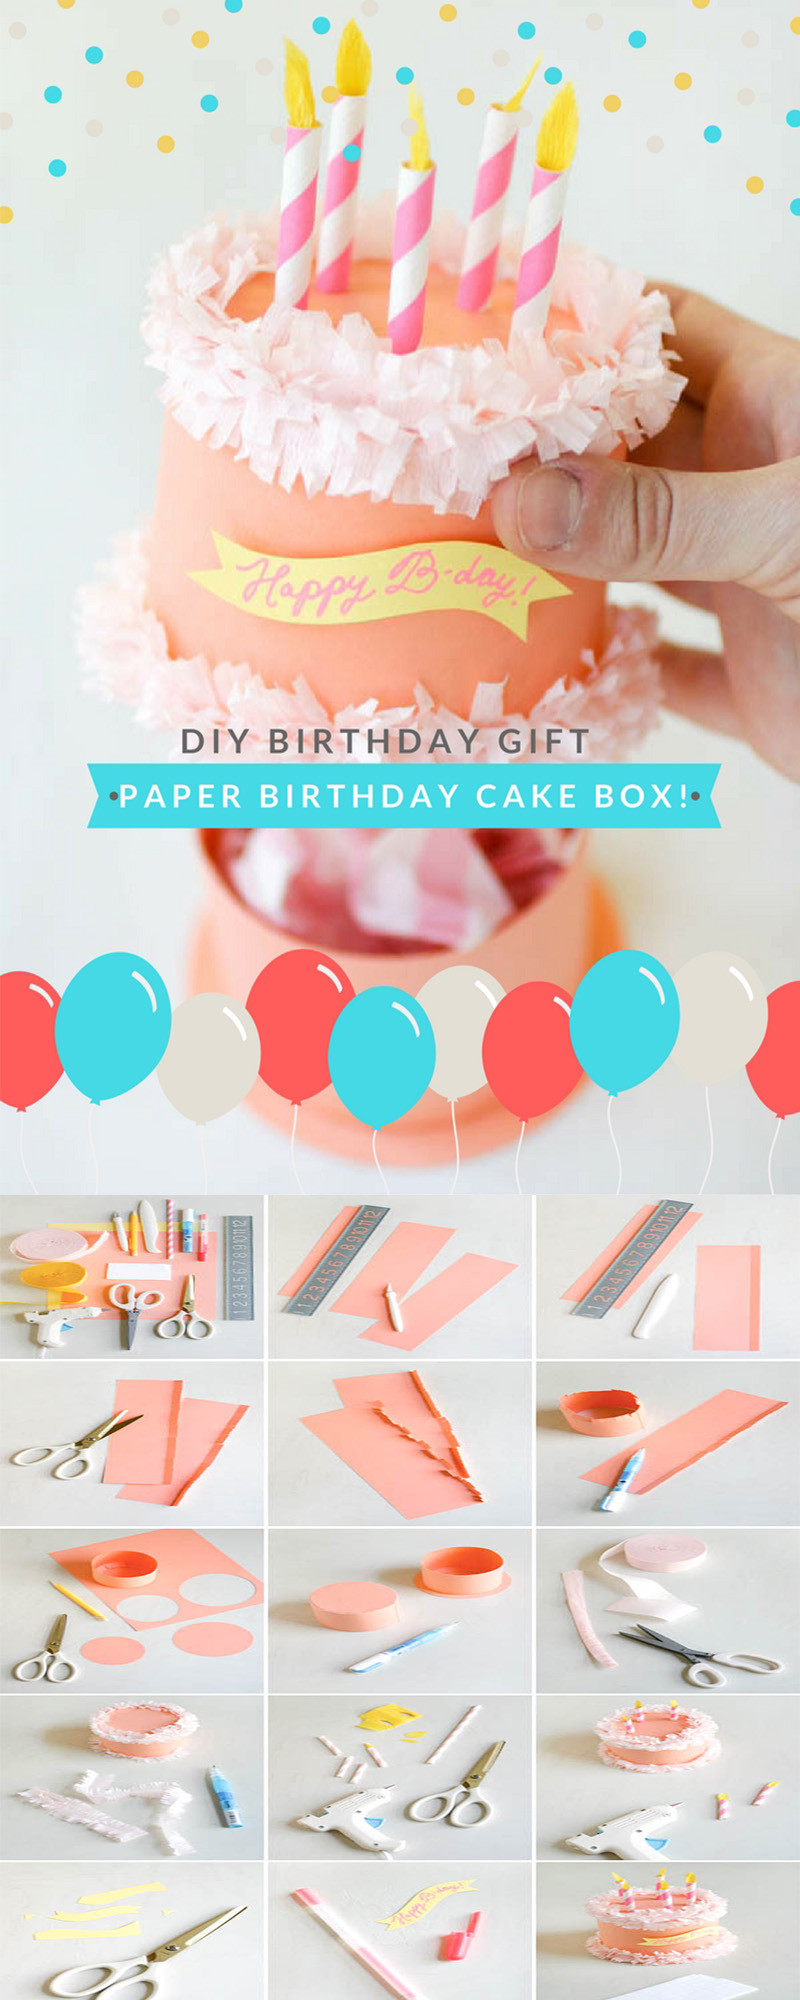 Diy Boyfriend Birthday Gifts
 DIY Gift Ideas for Your Boyfriend Paper Birthday Cake Box